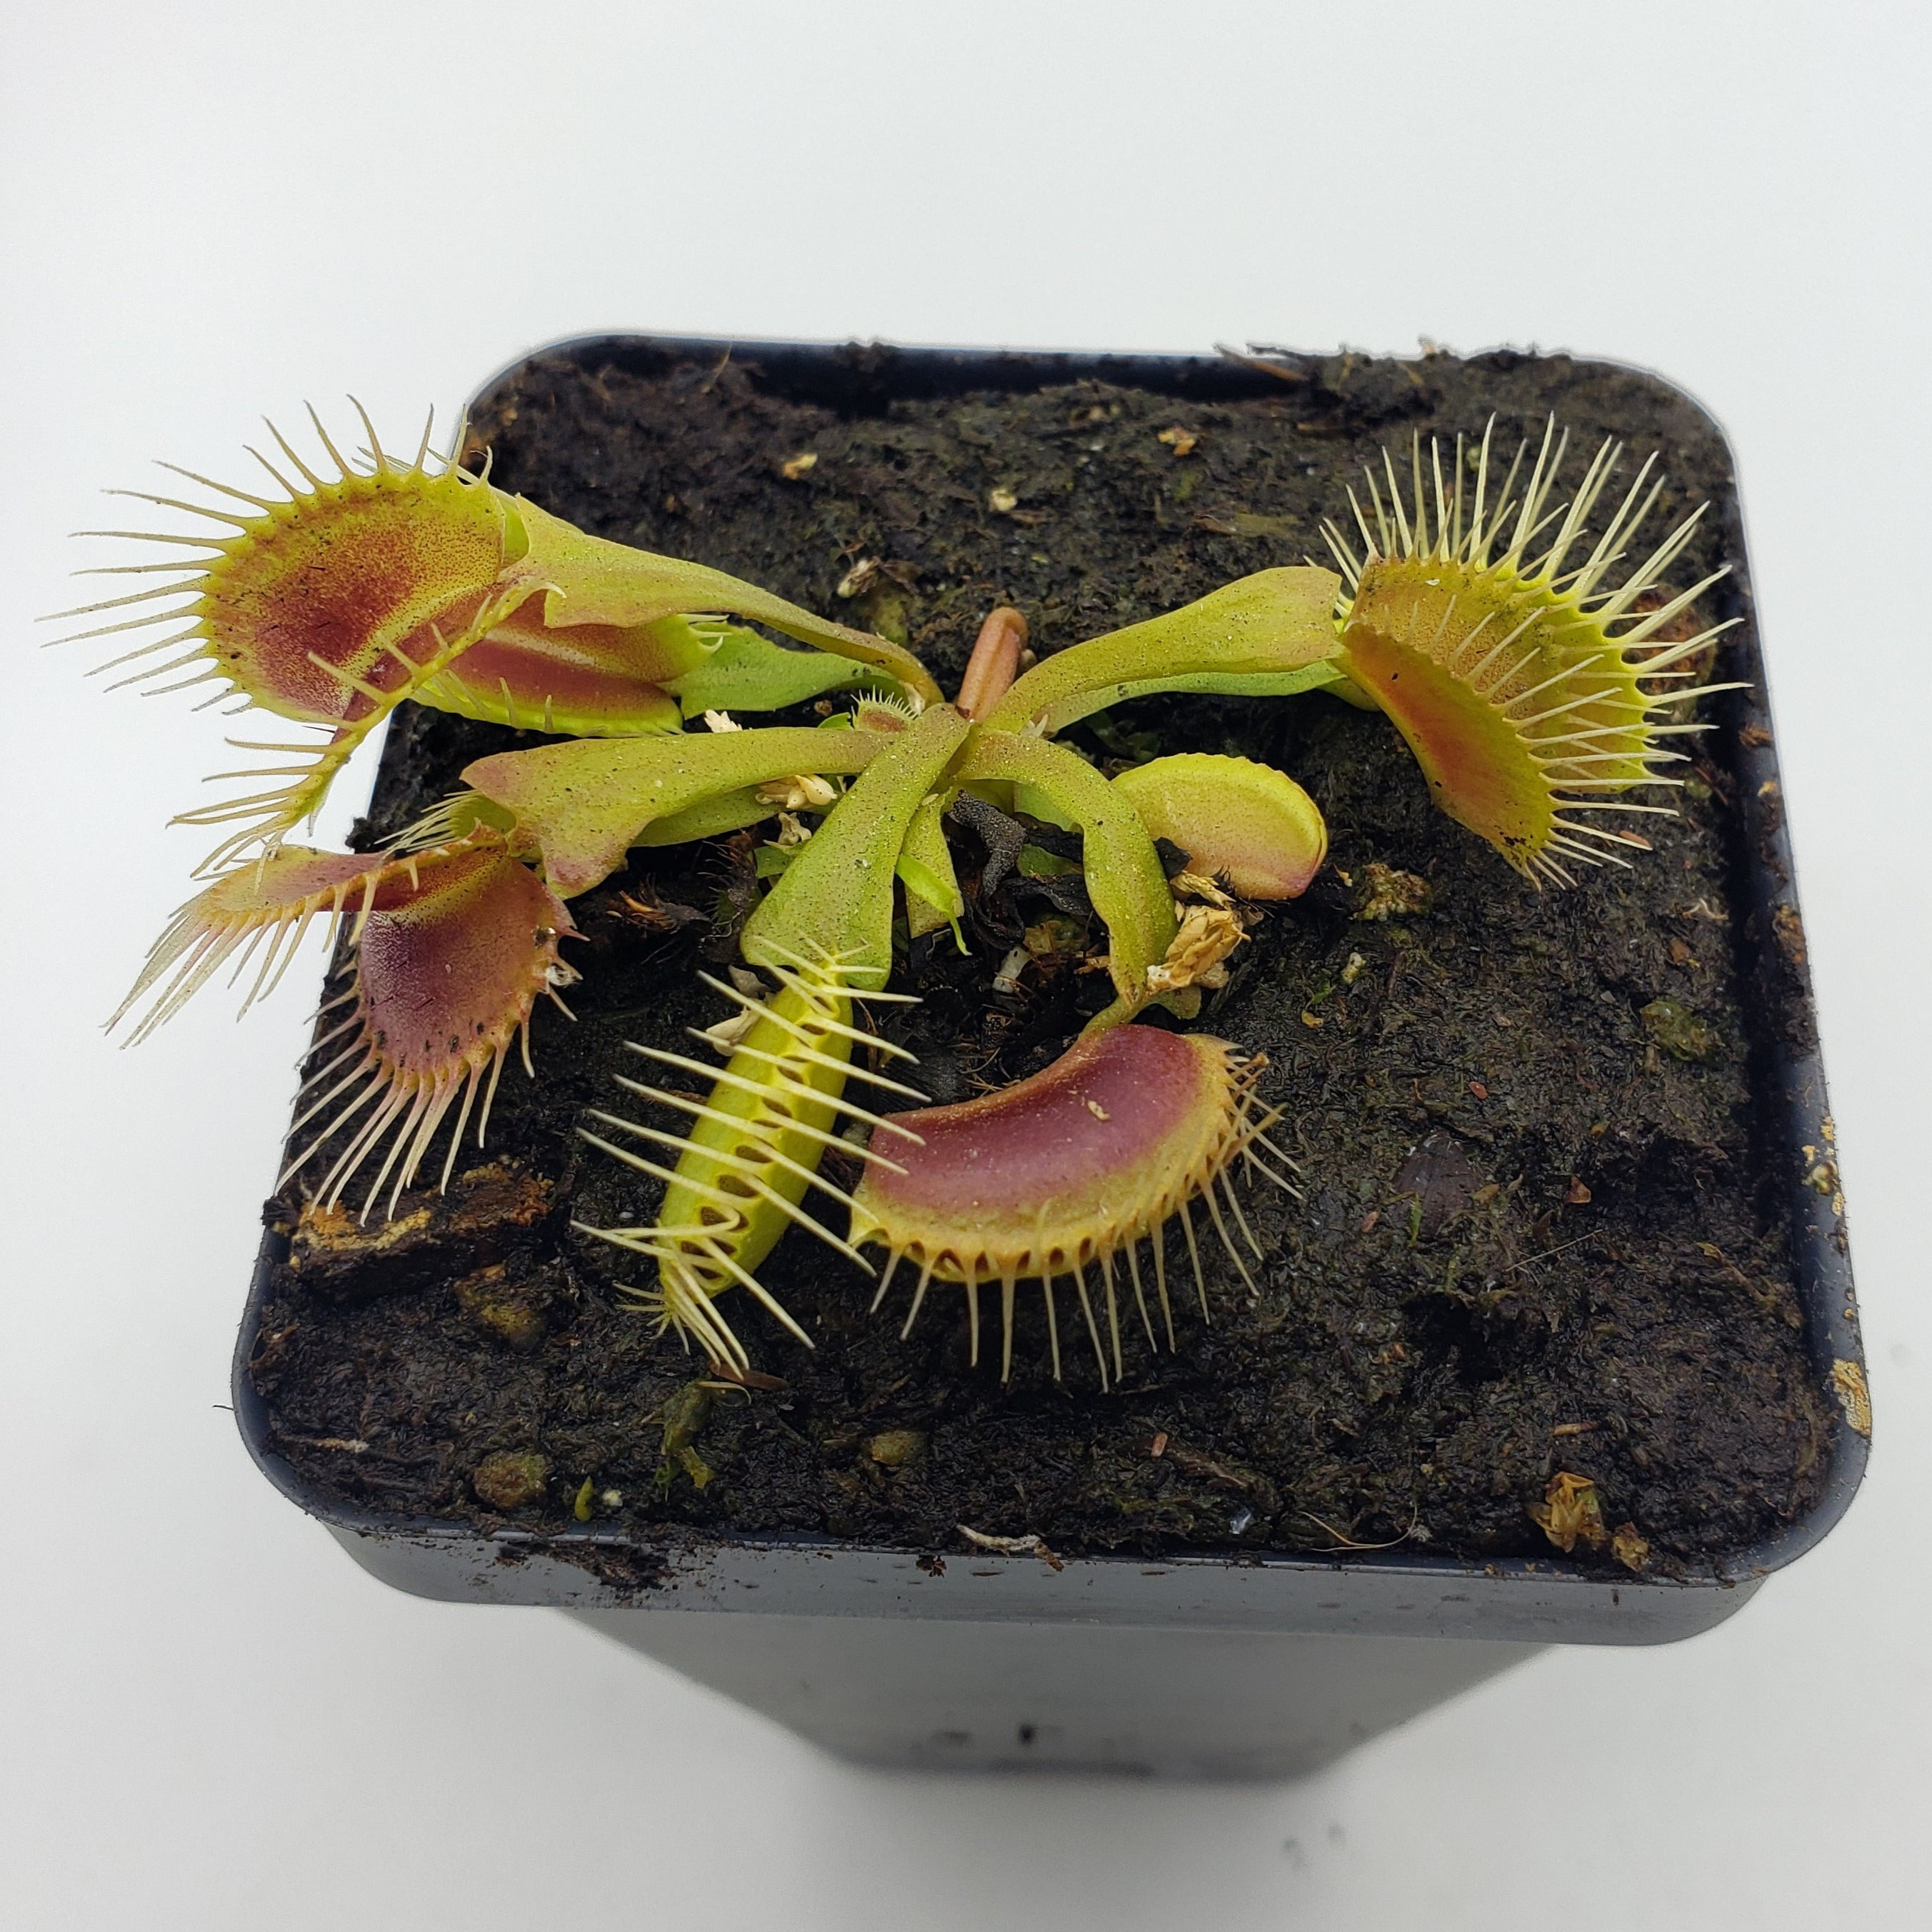 Venus flytrap (Dionaea muscipula) "Funnel Trap" or 'Trichterfalle' - Rainbow Carnivorous Plants LLC